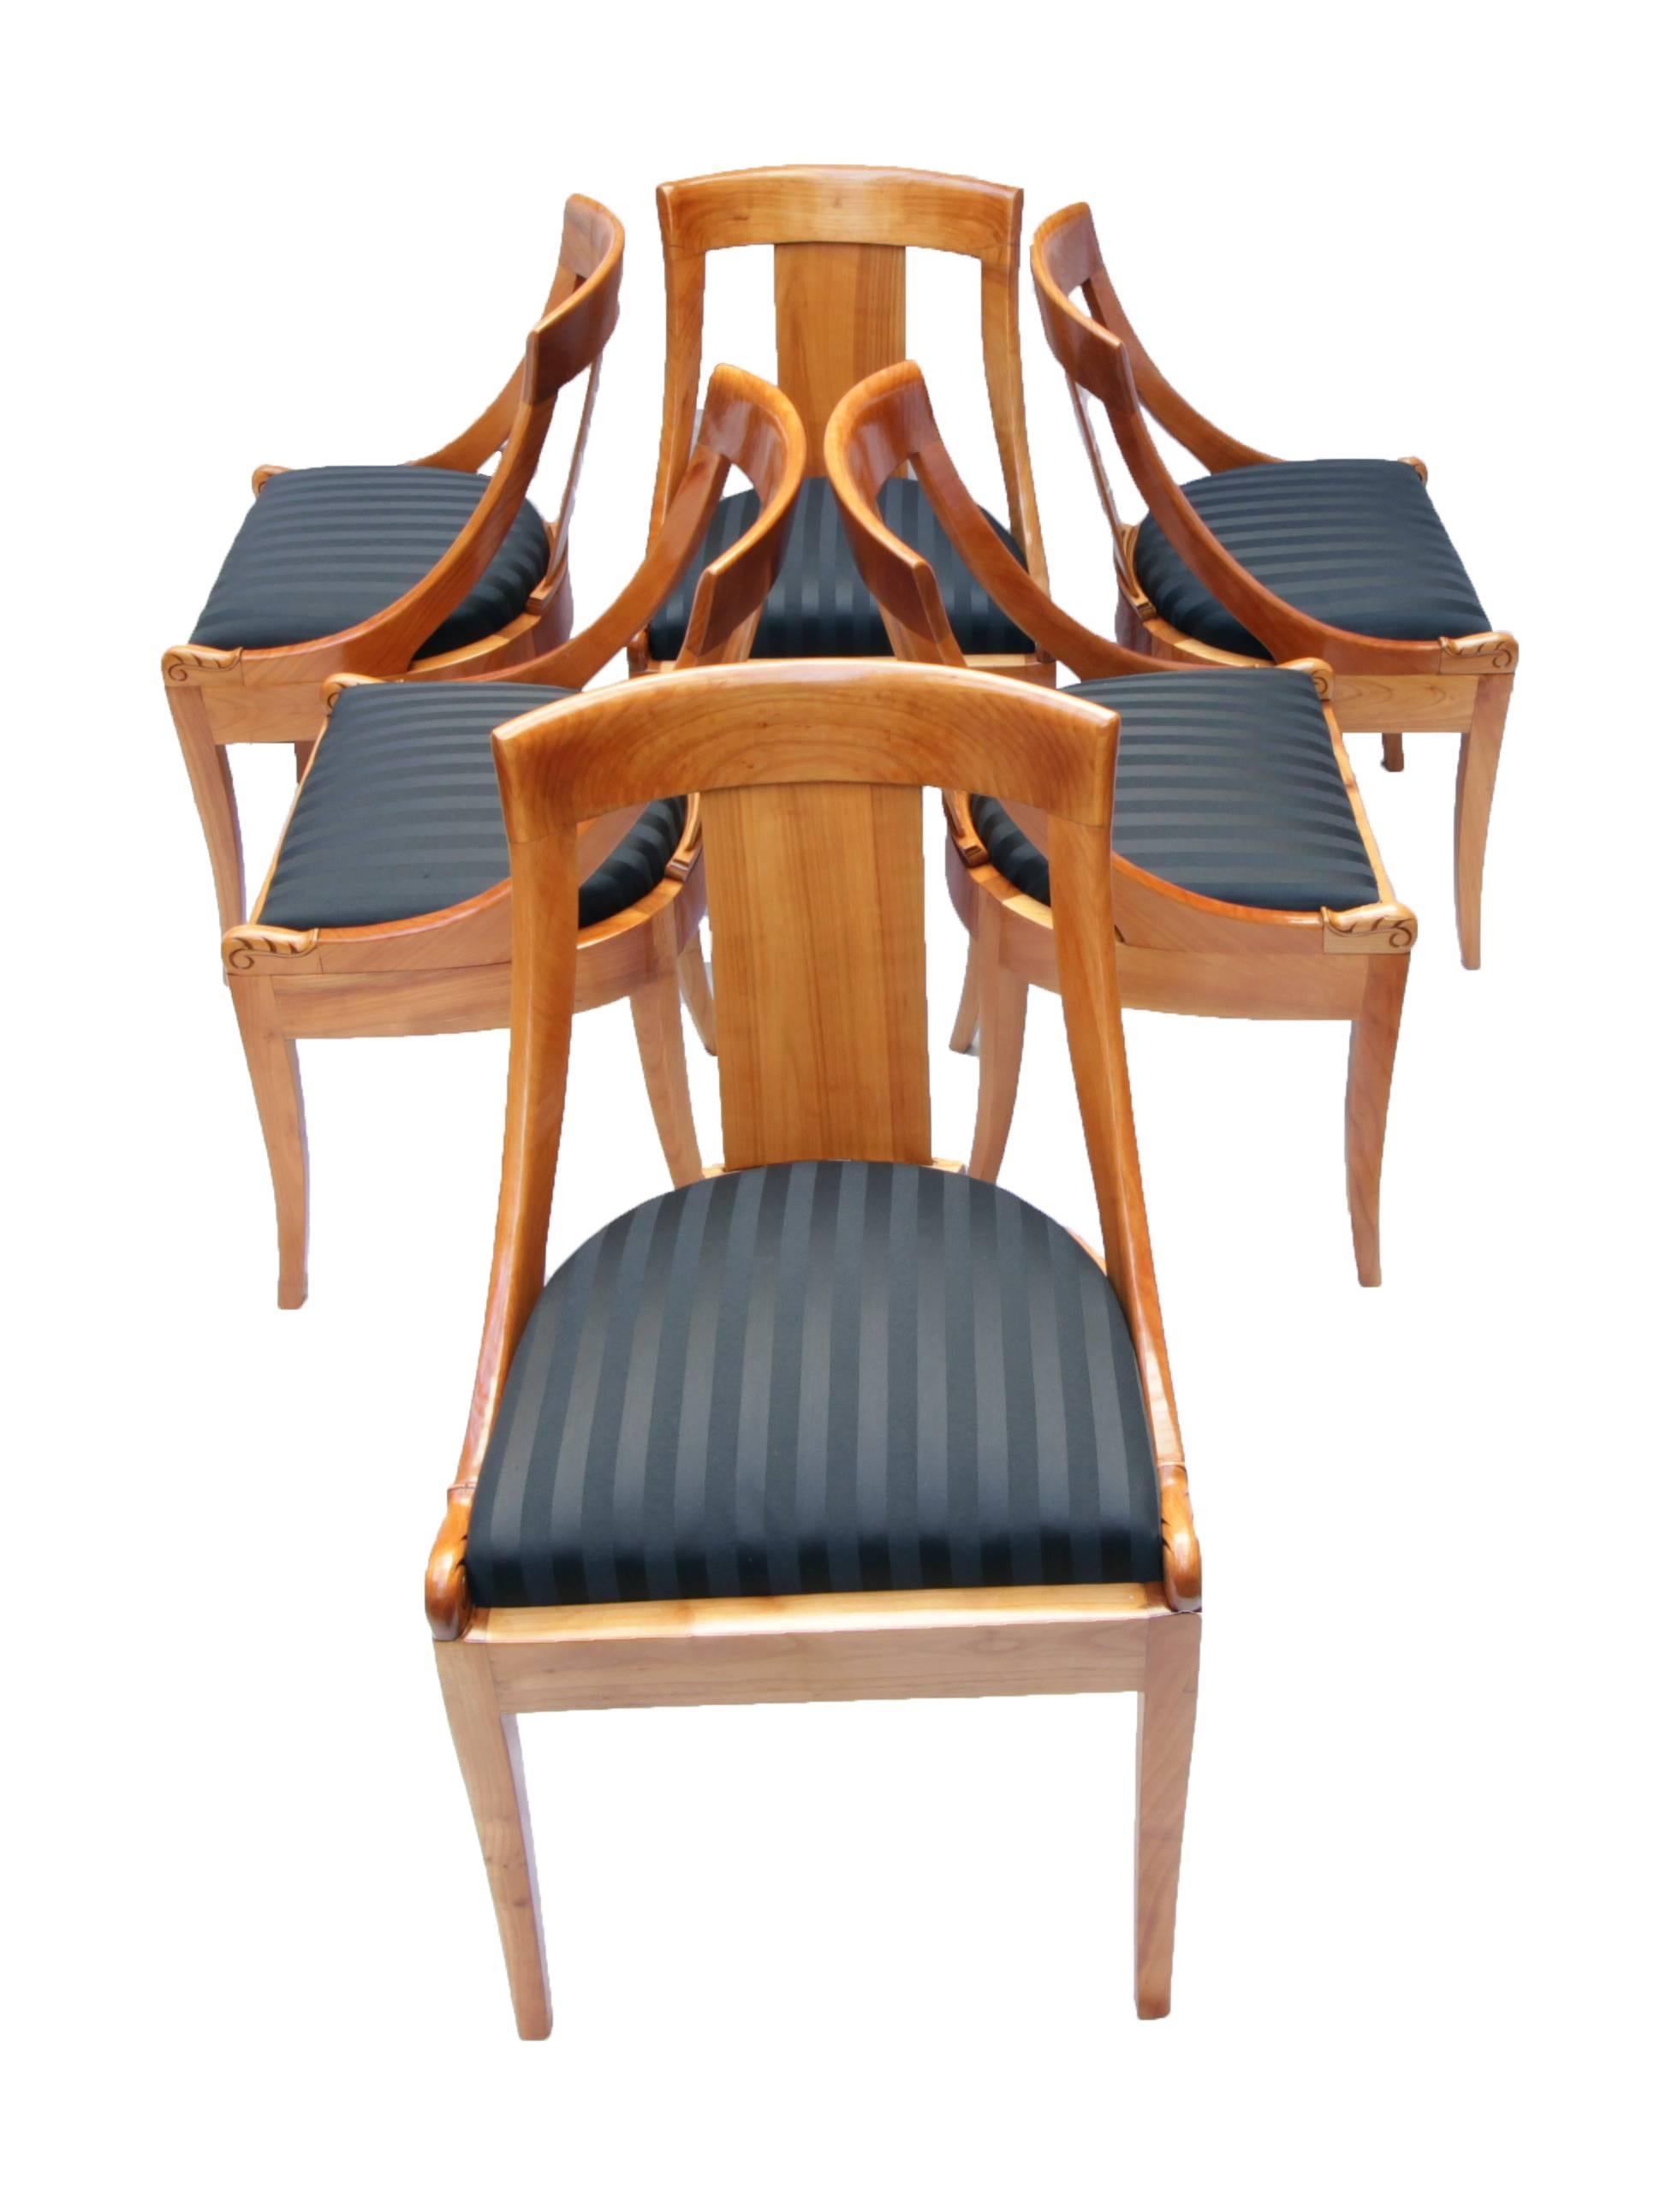 Biedermeier Gondola chairs, set of six
Solid cherrywood
Biedermeier, circa 1820
New upholstered
Best restored and handpolished.
  